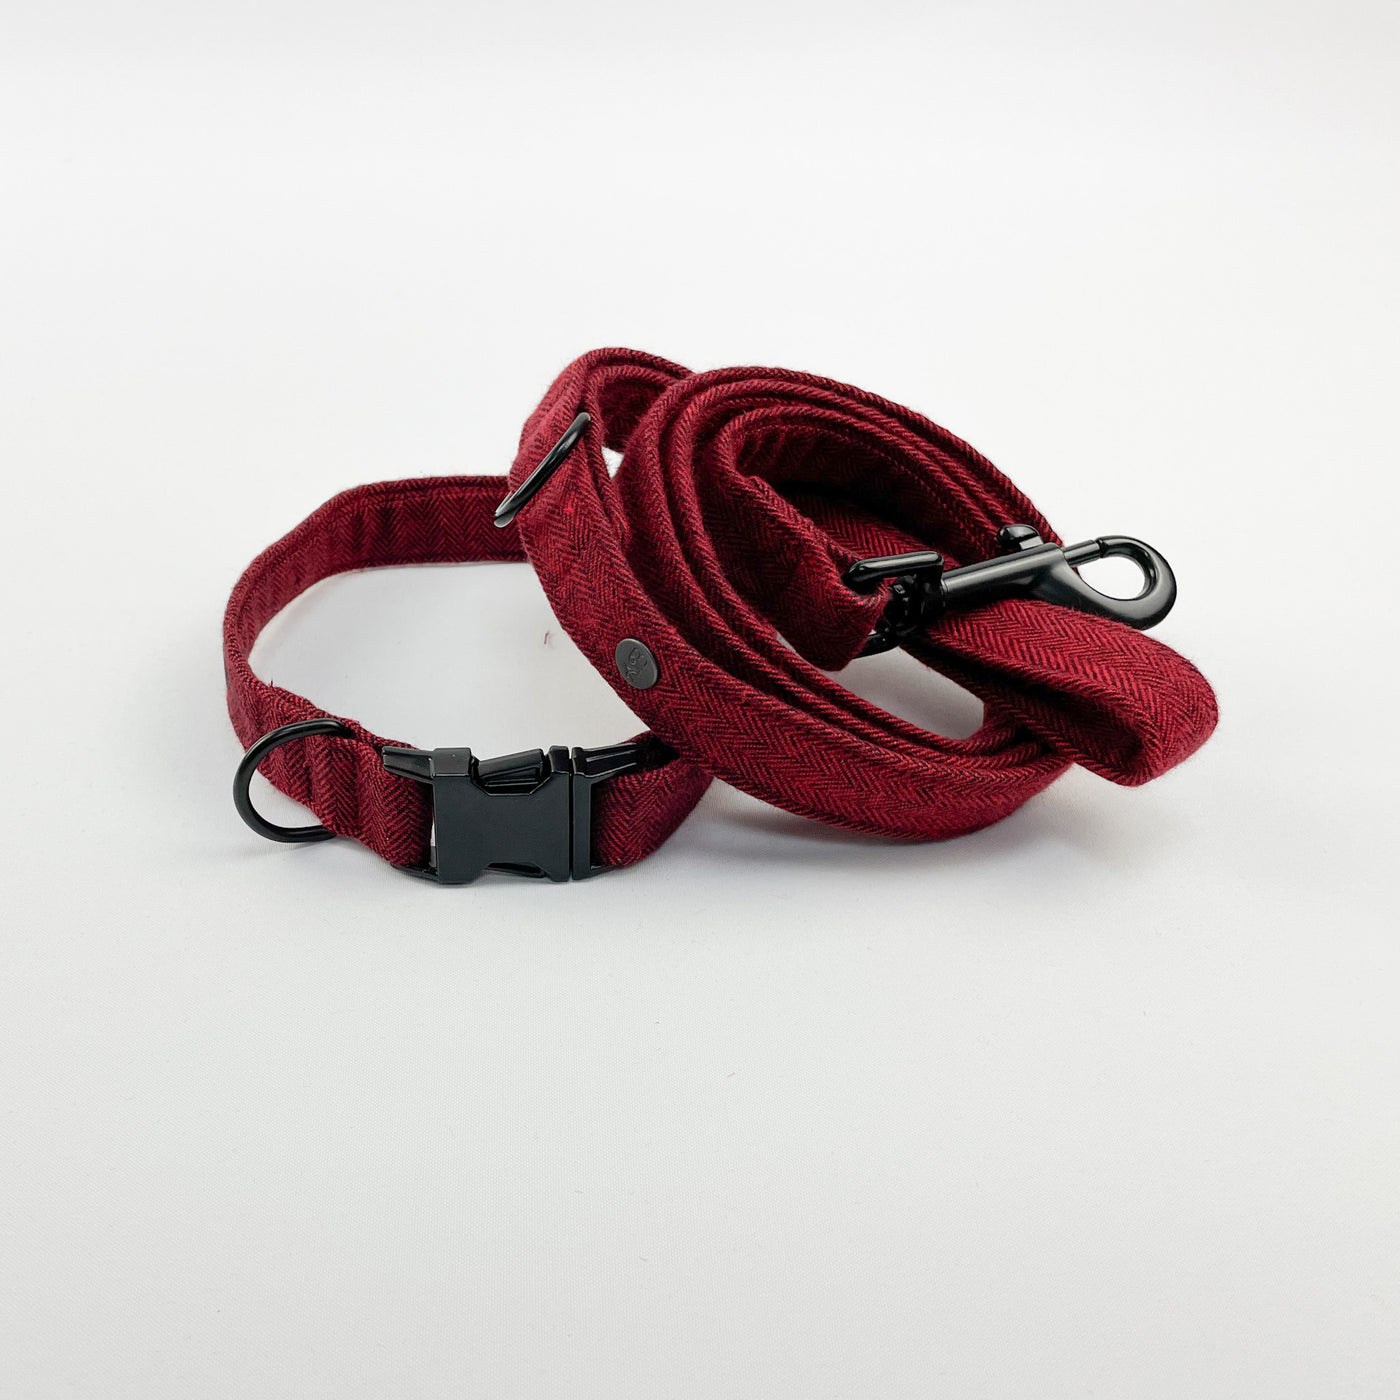 Cranberry Herringbone dog lead and collar